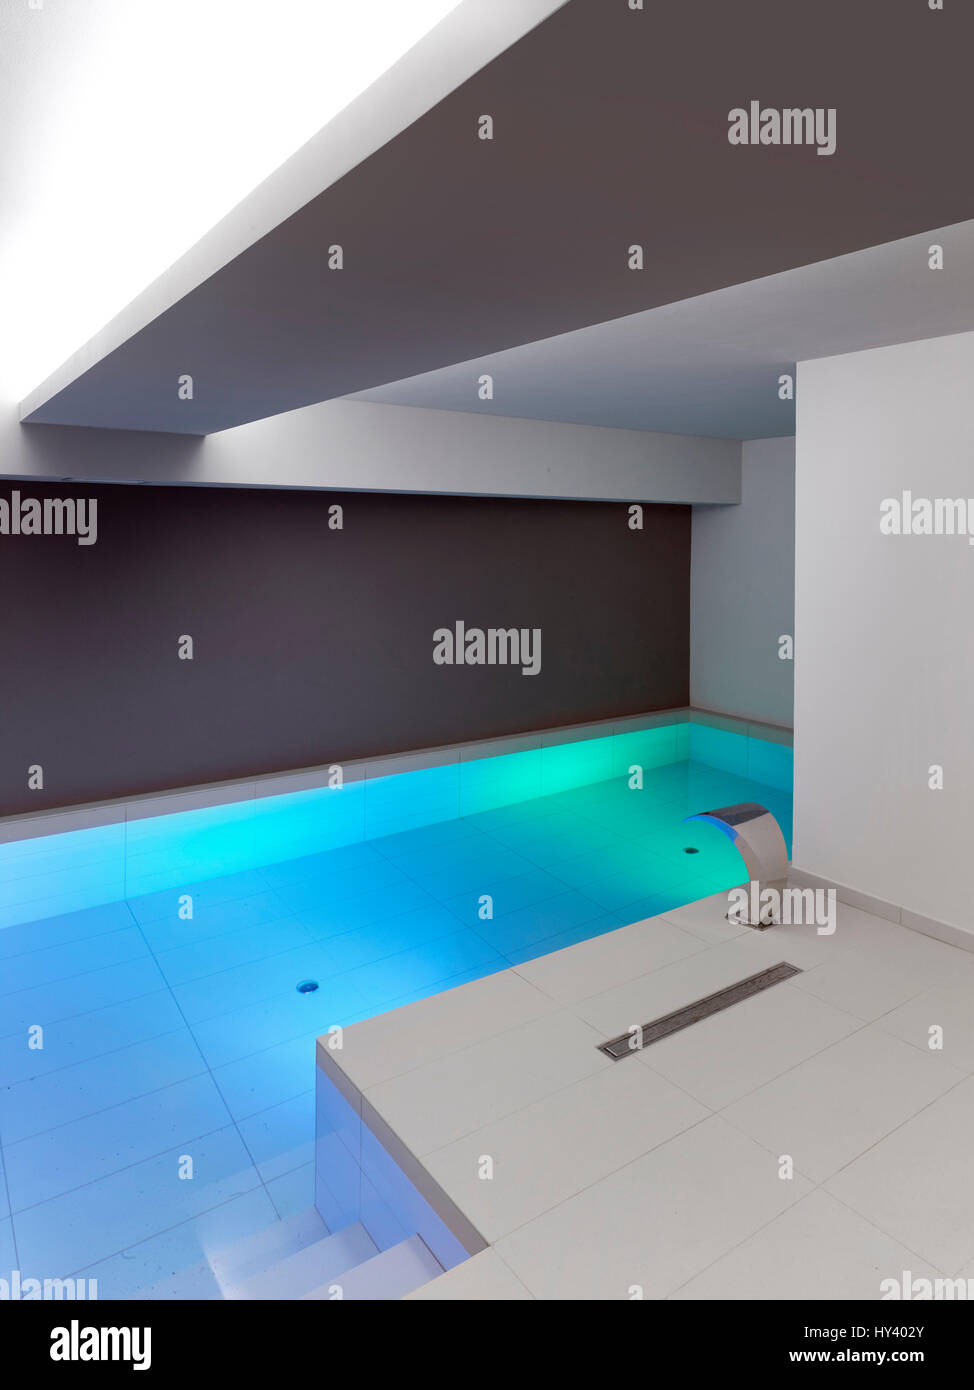 Zimmer mit Pool. Sarmede House, Sarmede, Italien. Architekt: Tate Harmer, 2015. Stockfoto